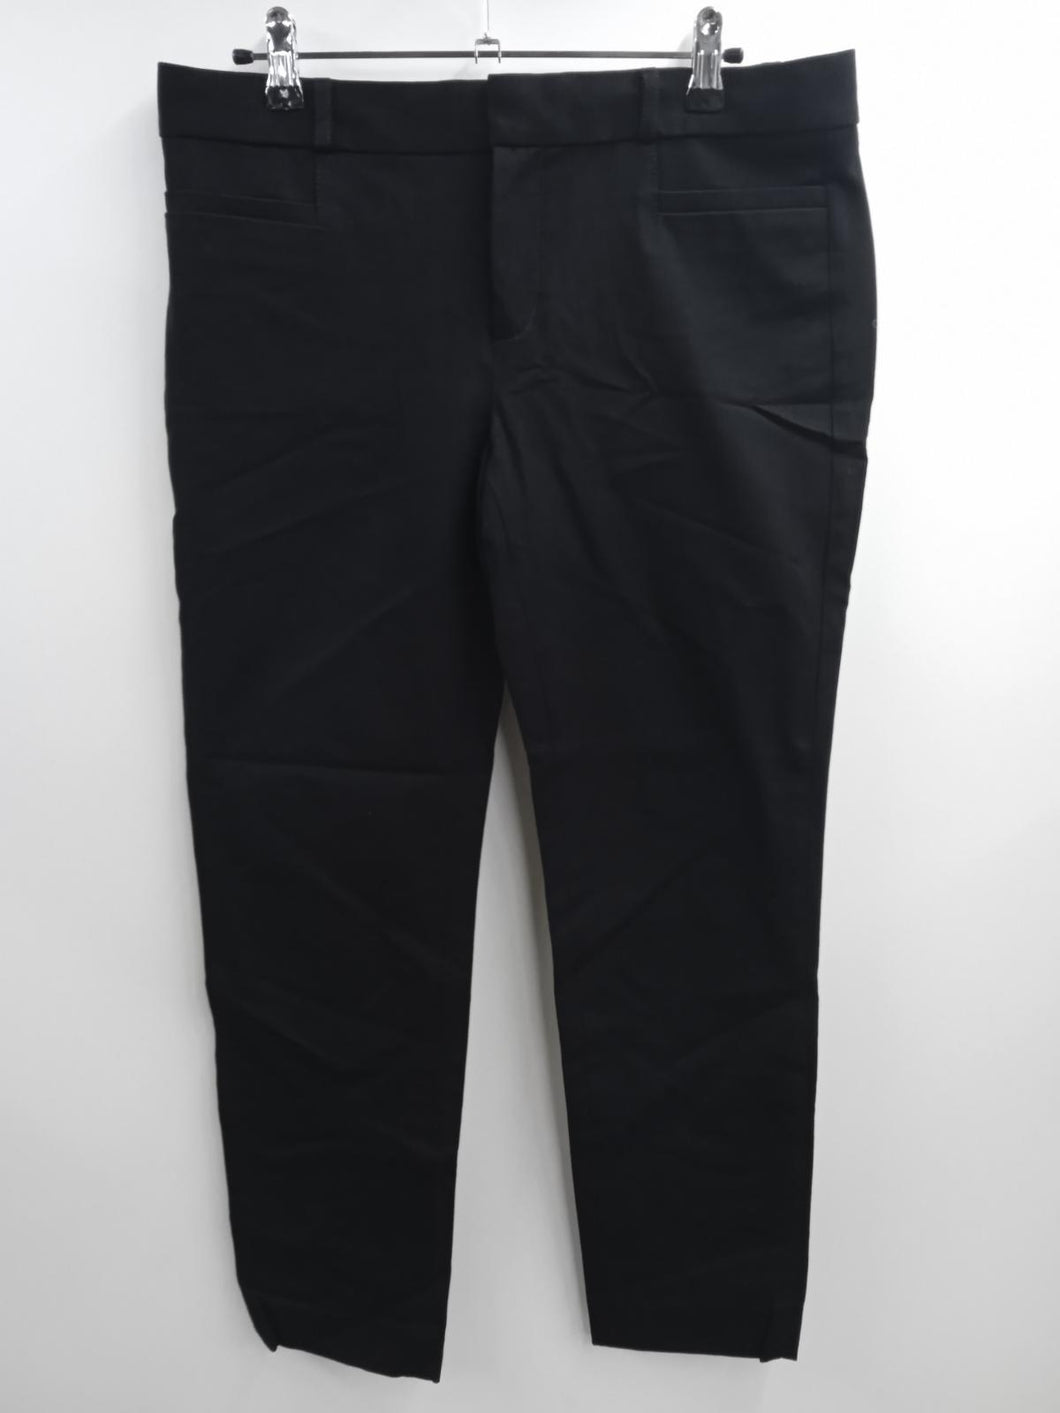 BANANA REPUBLIC Ladies Navy Black Cotton Blend Straight Leg Trousers Size UK6